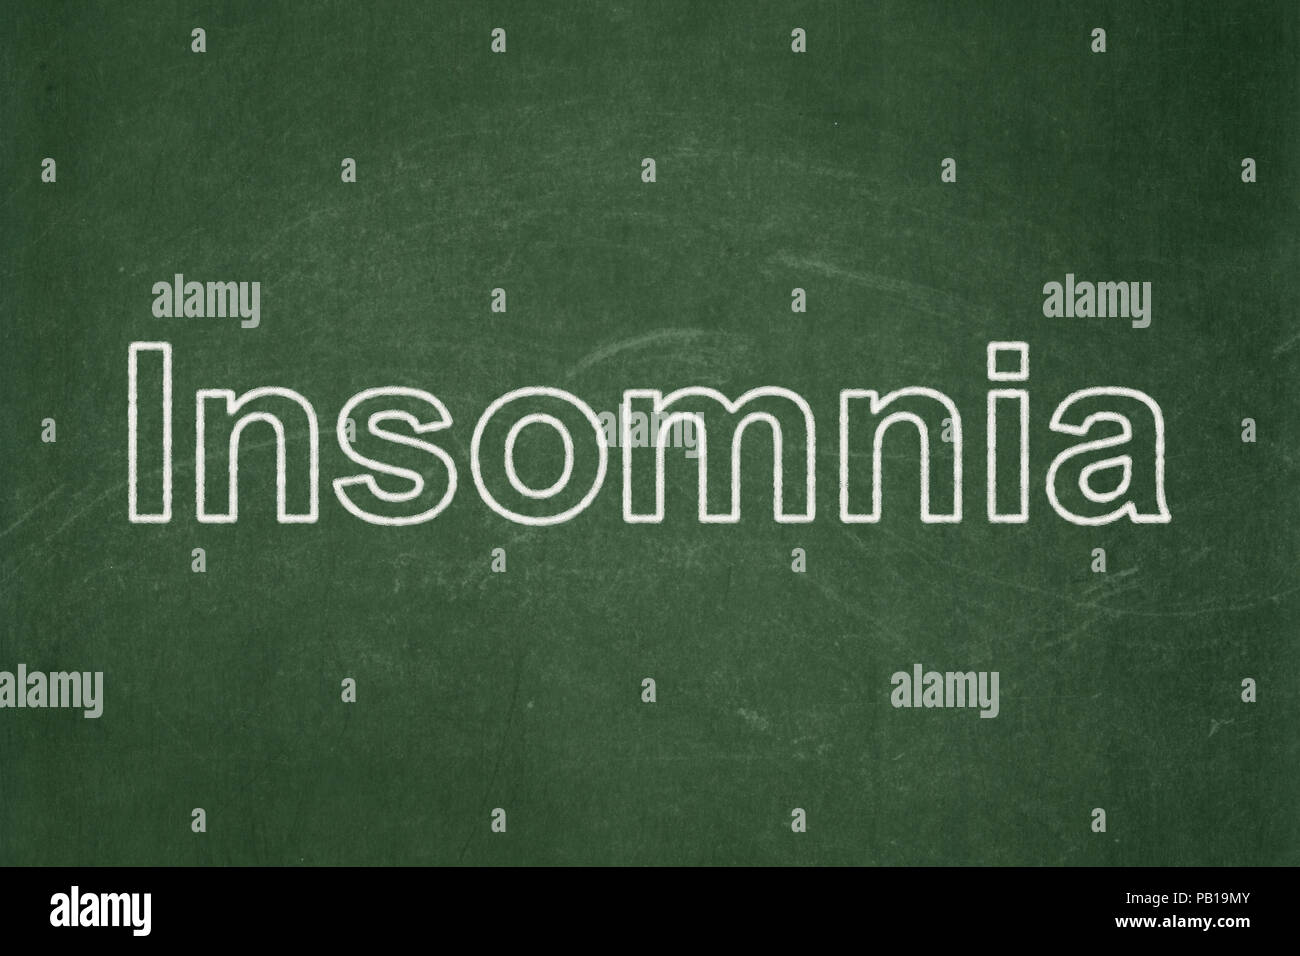 insomnia background